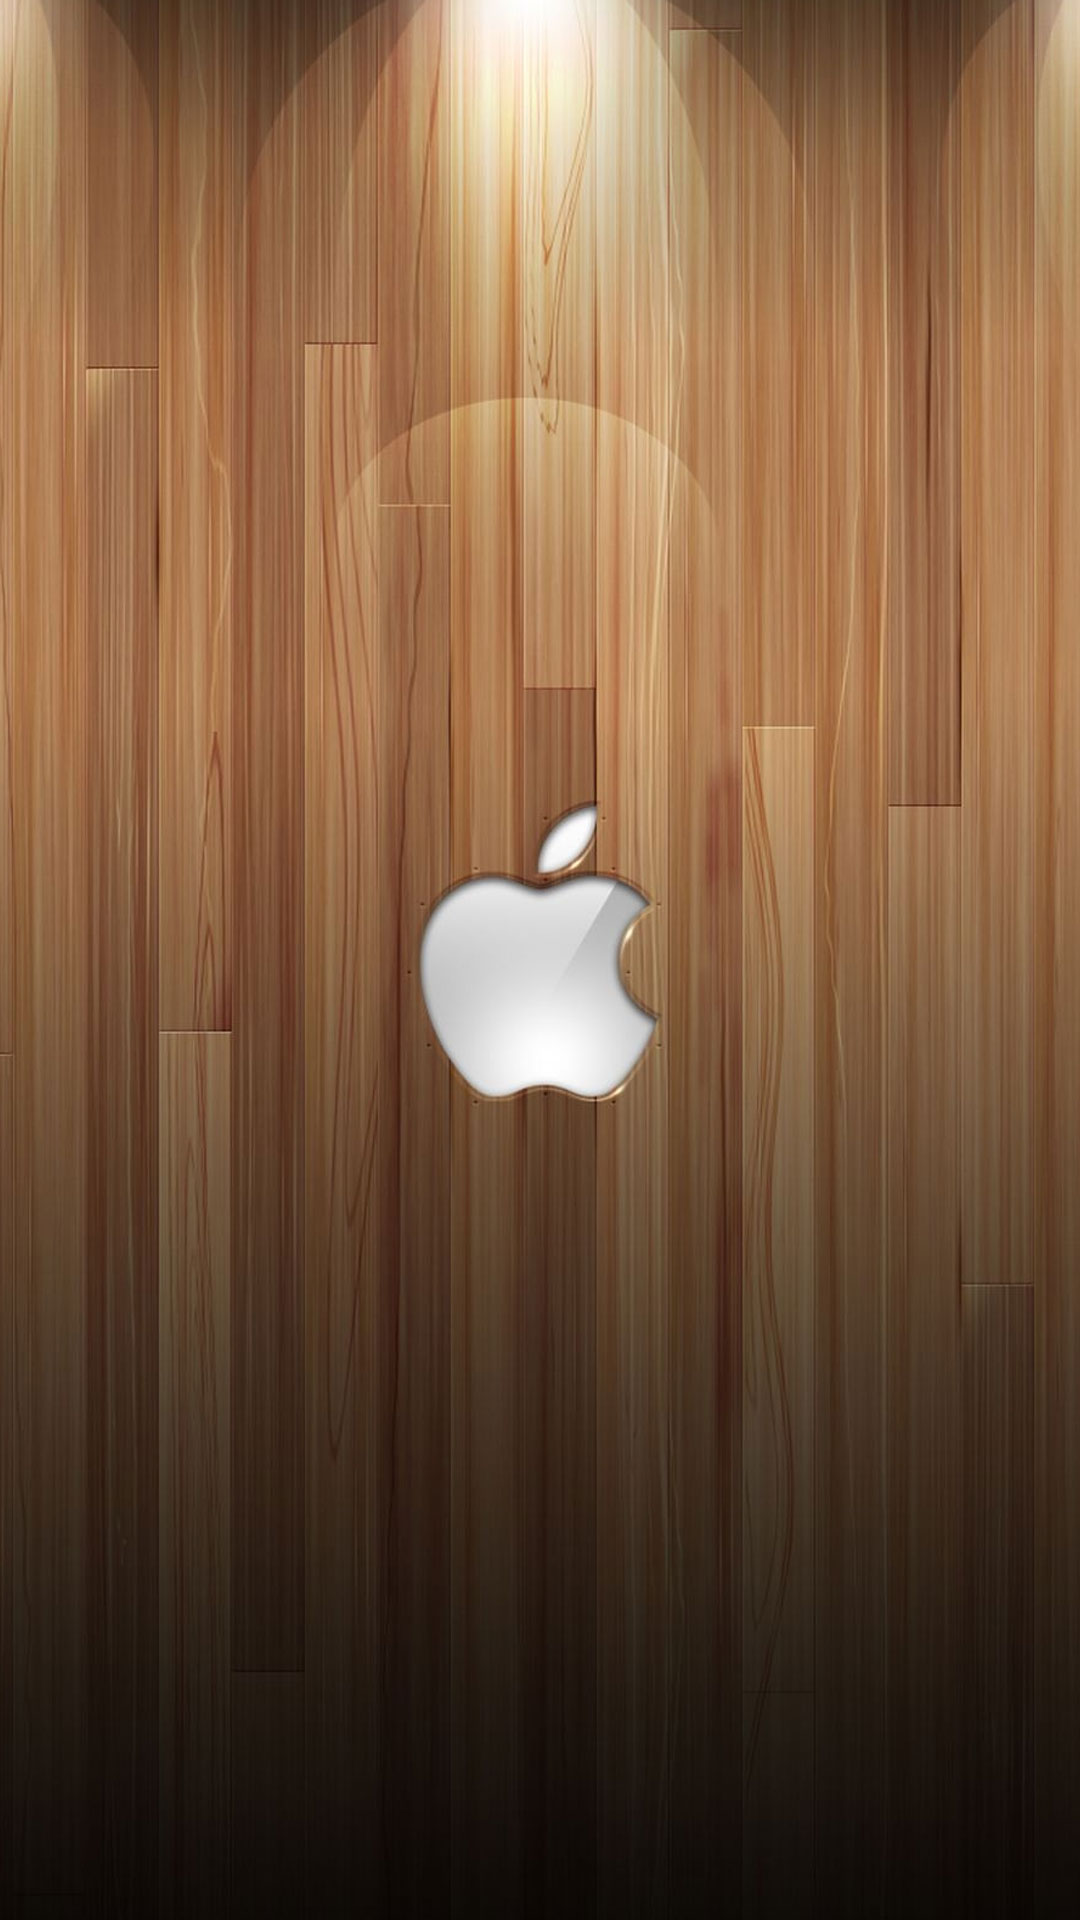 41 Apple Iphone 6s Plus Wallpaper On Wallpapersafari